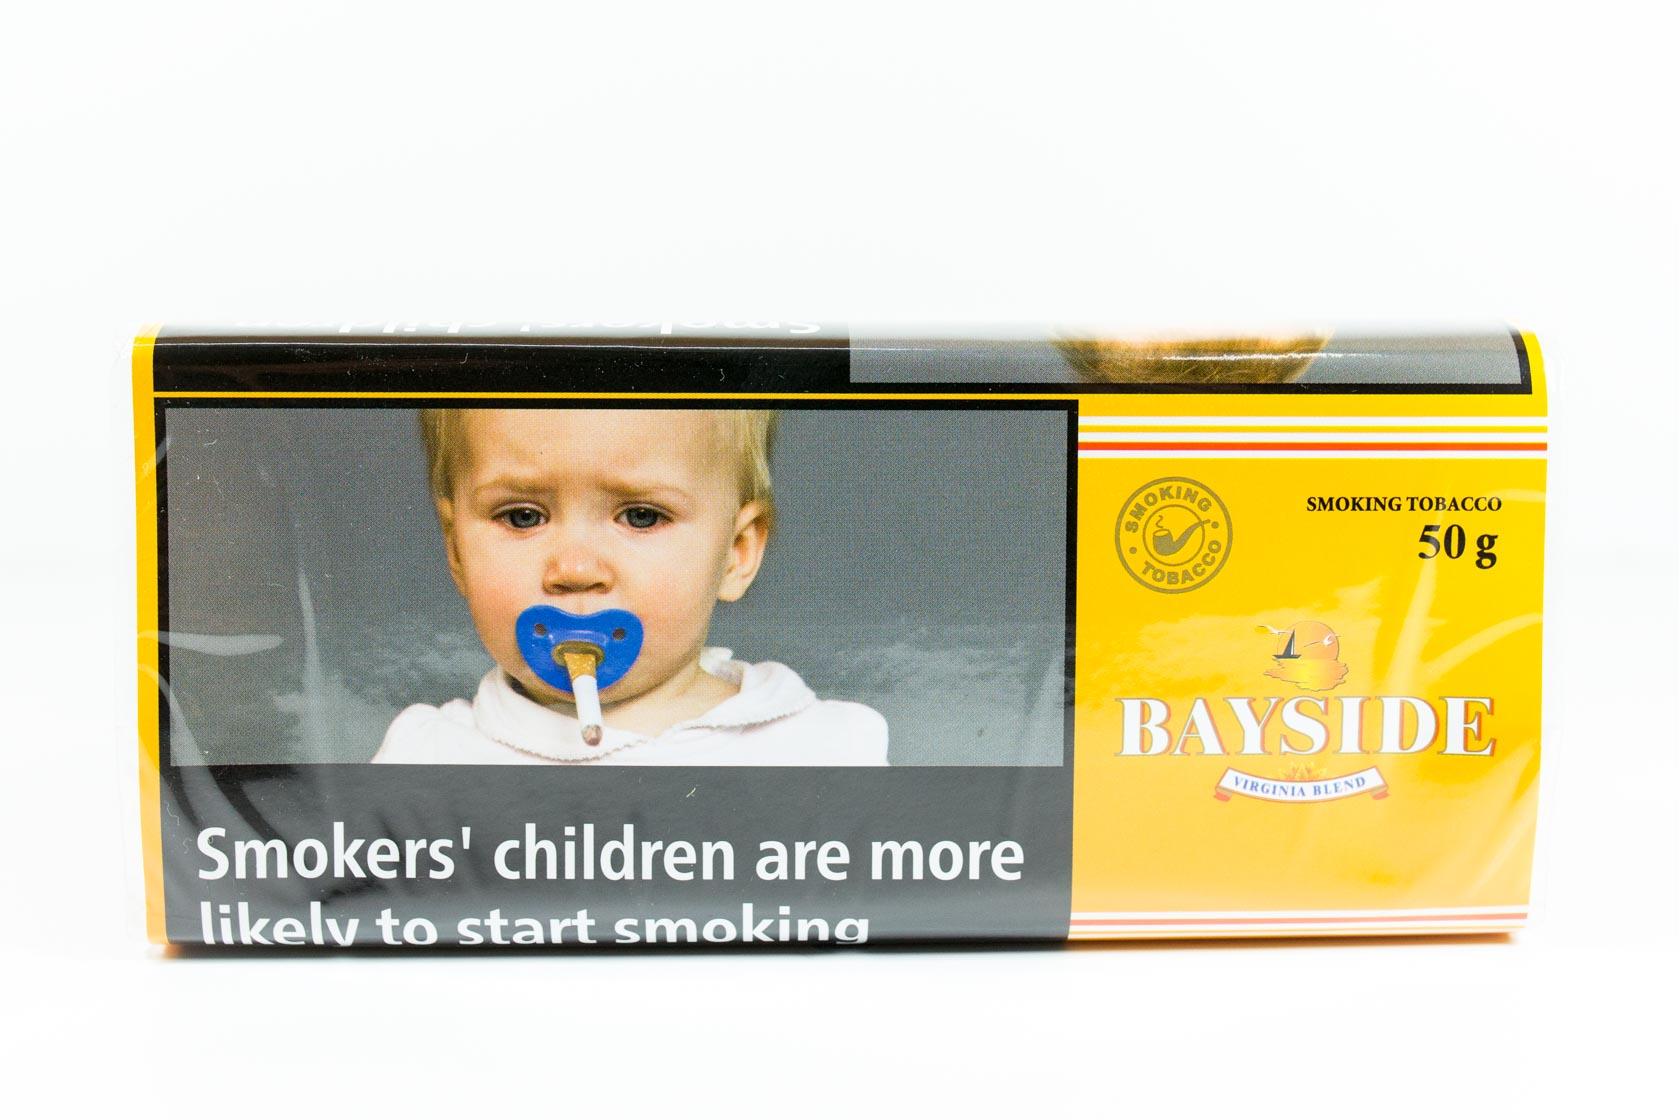 Bayside Virginia Blend Tobacco 50g